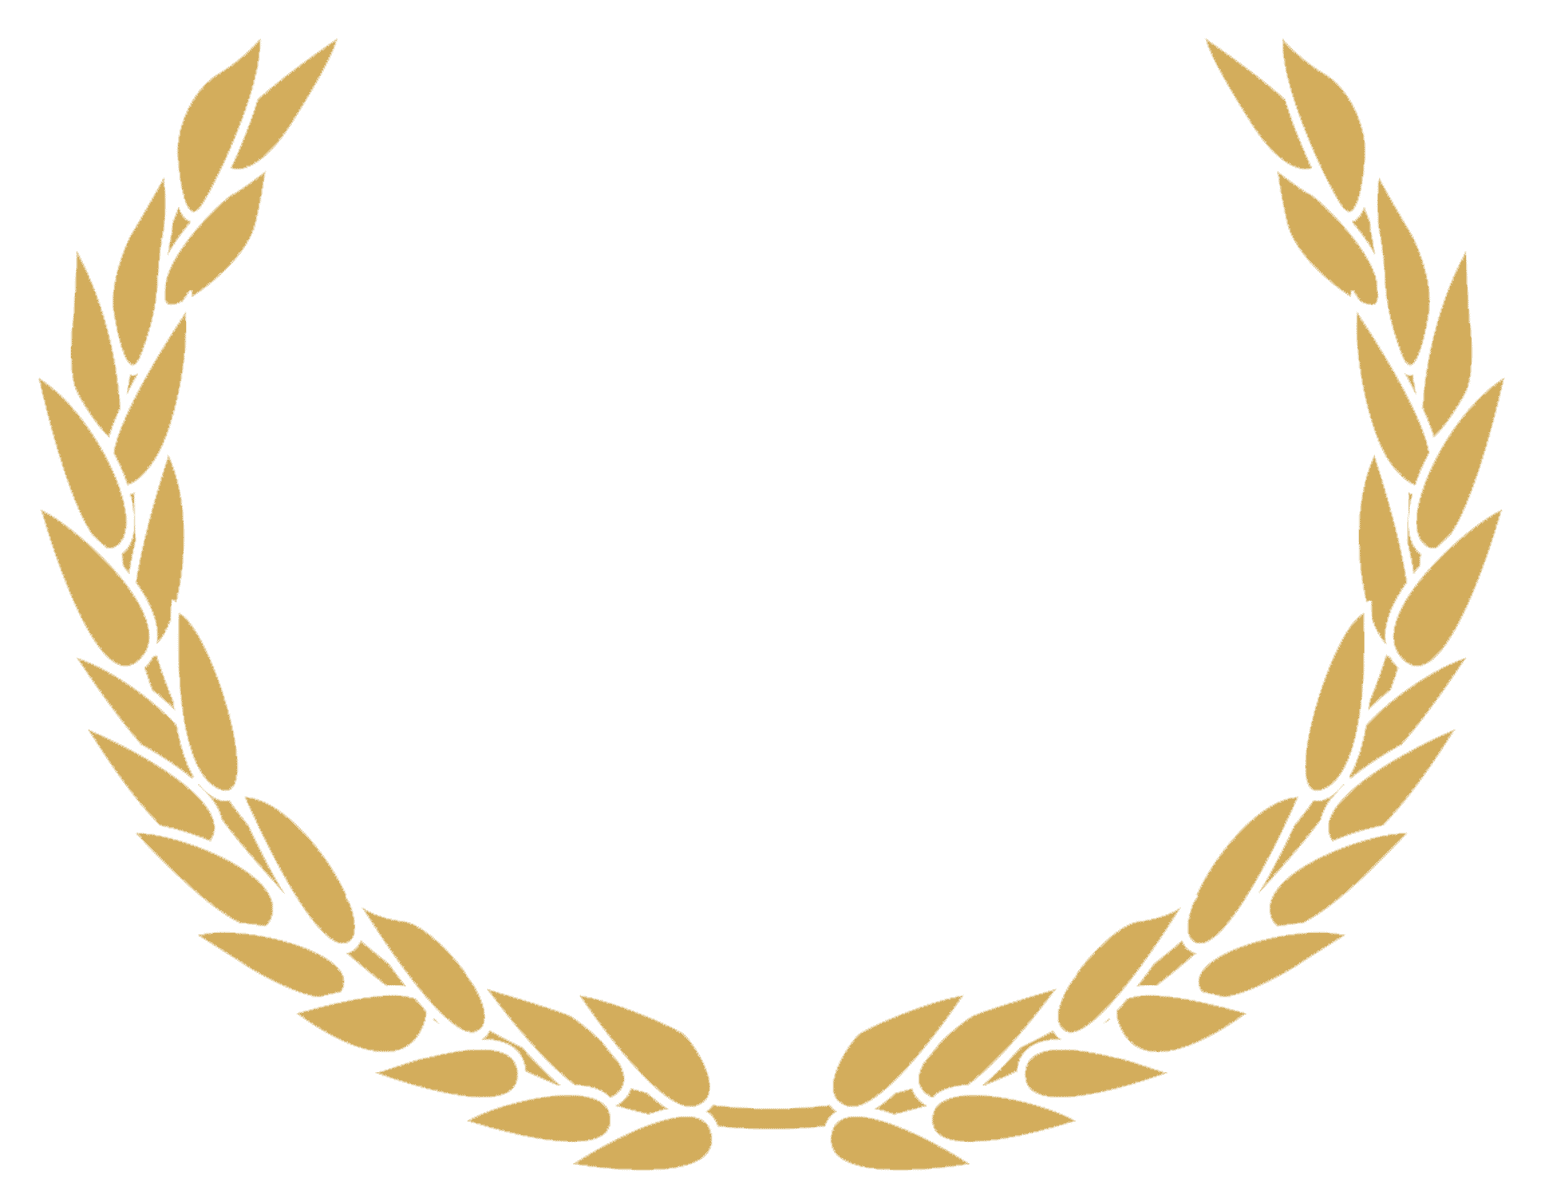 Prix innovation 2021